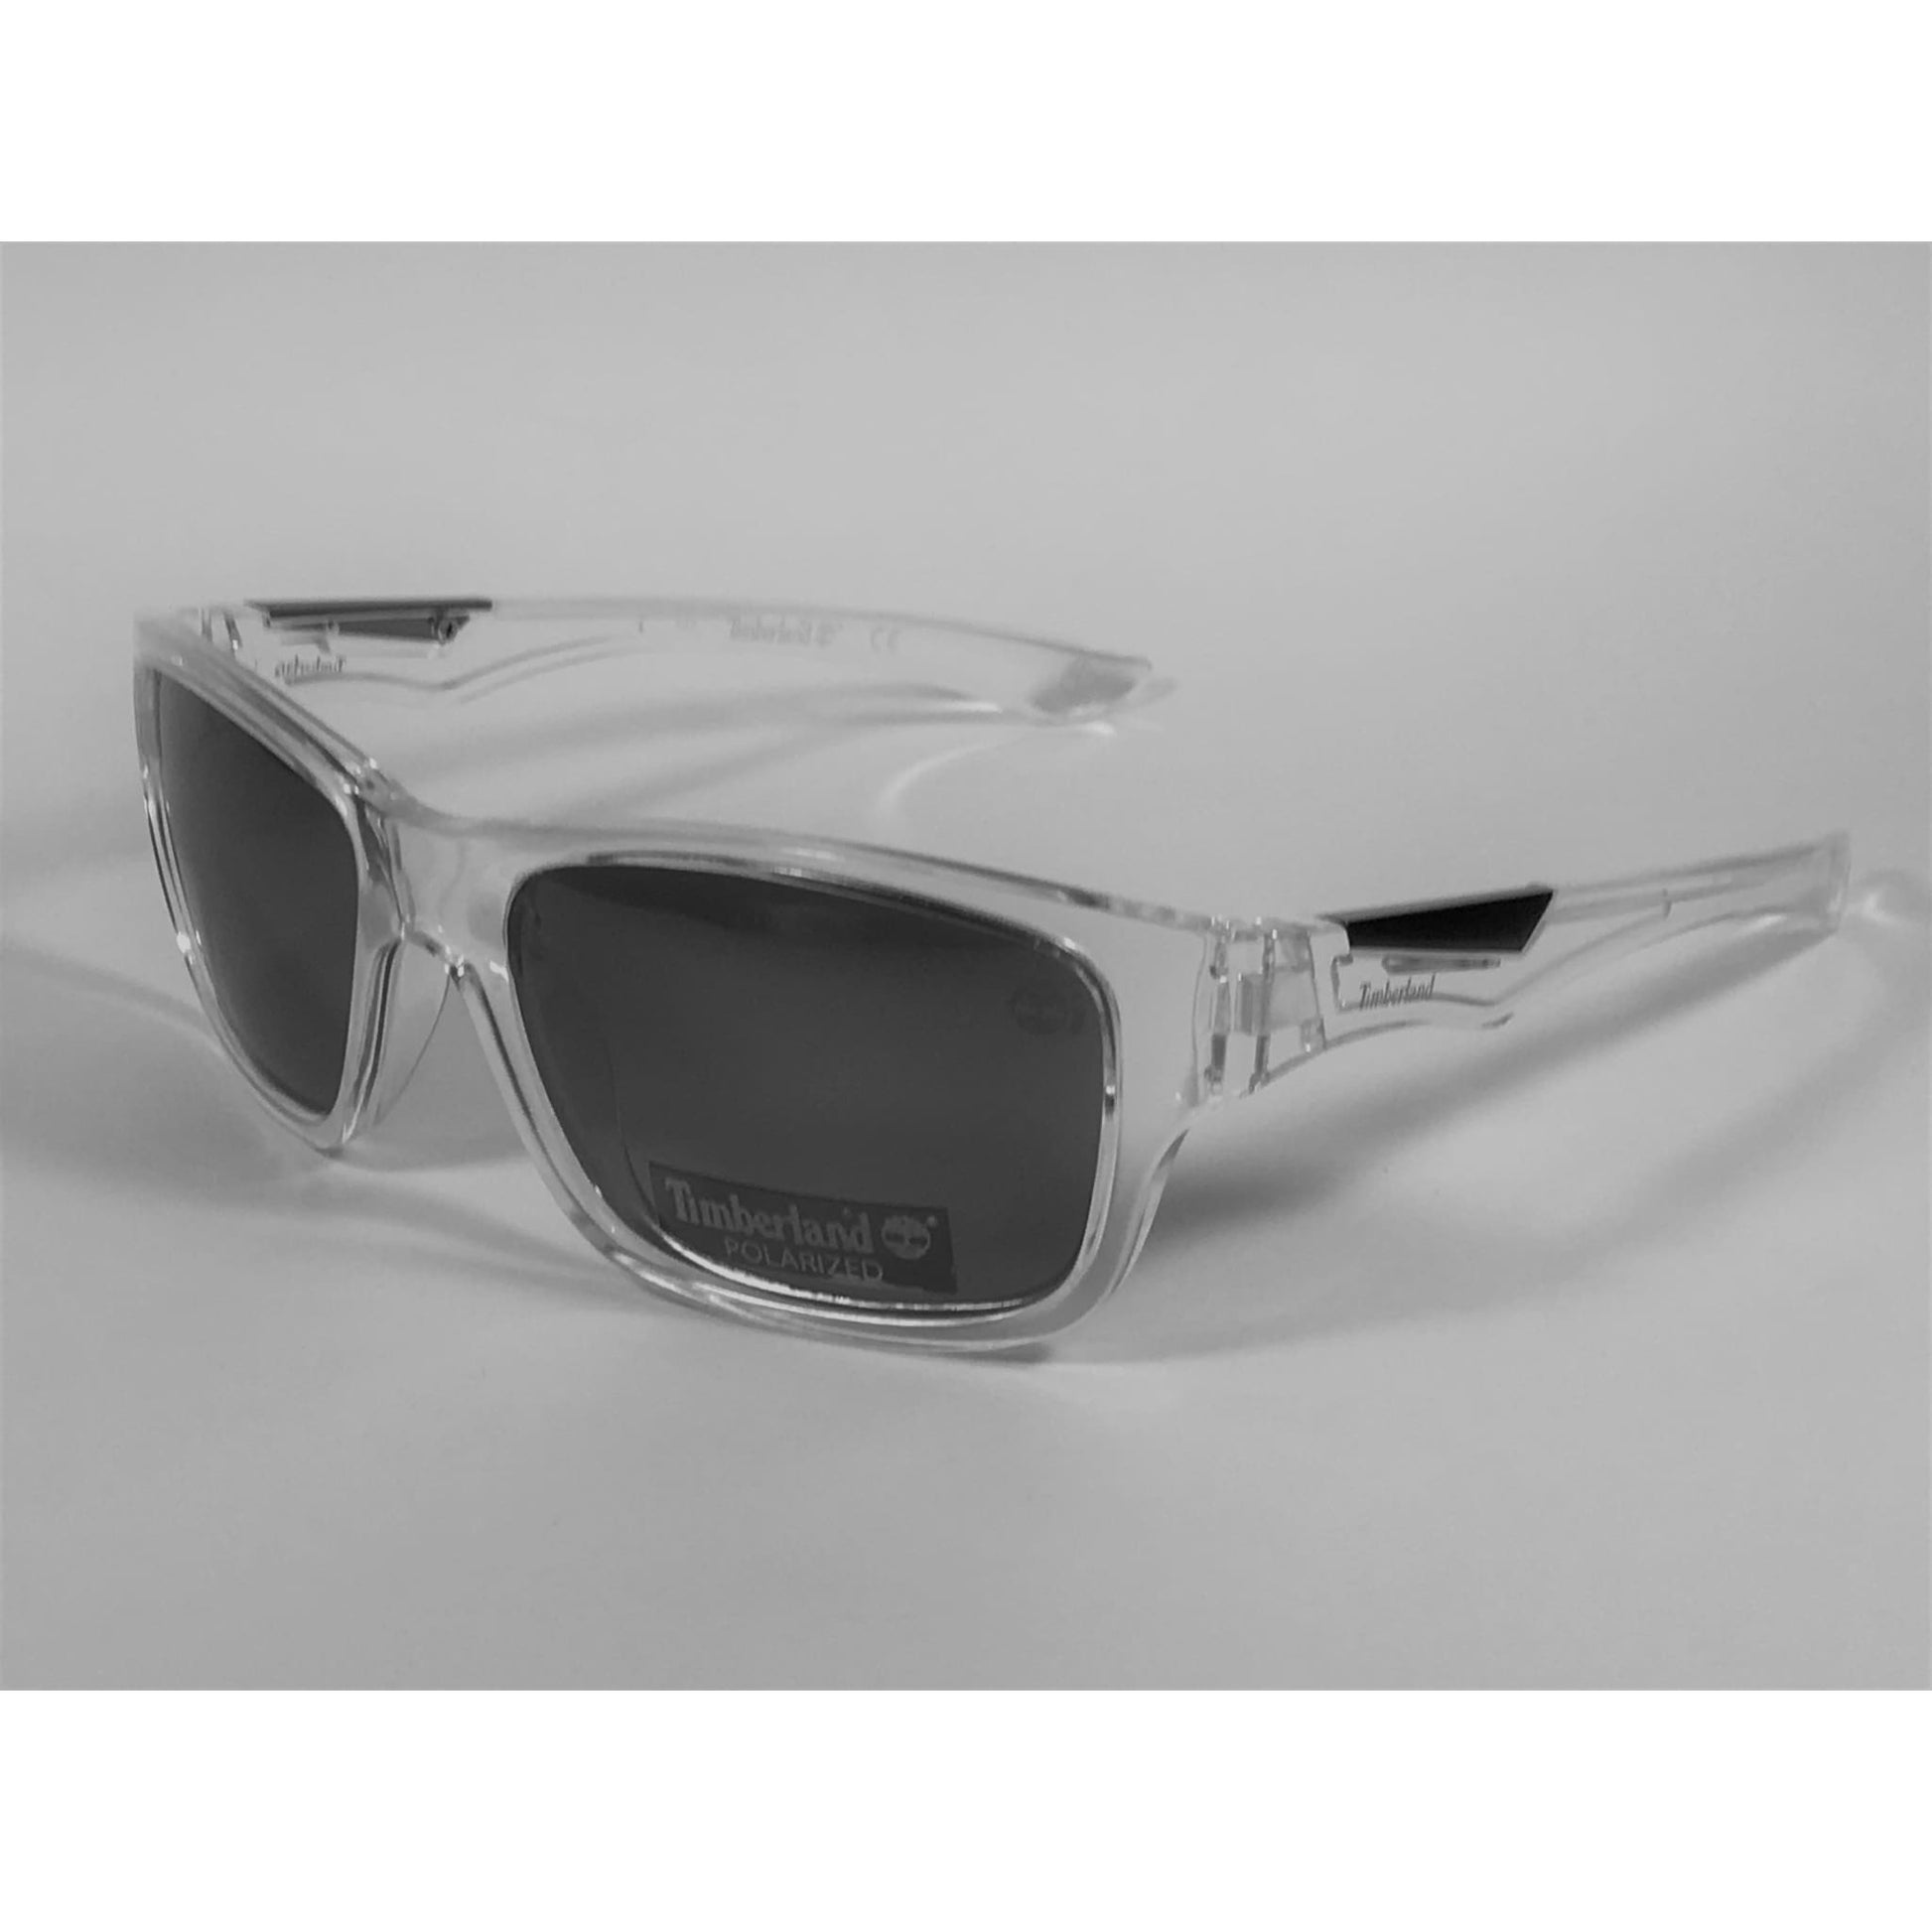 Timberland Polarized Sport Sunglasses Clear Crystal Mirror Lens TB7155 26D - Sunglasses